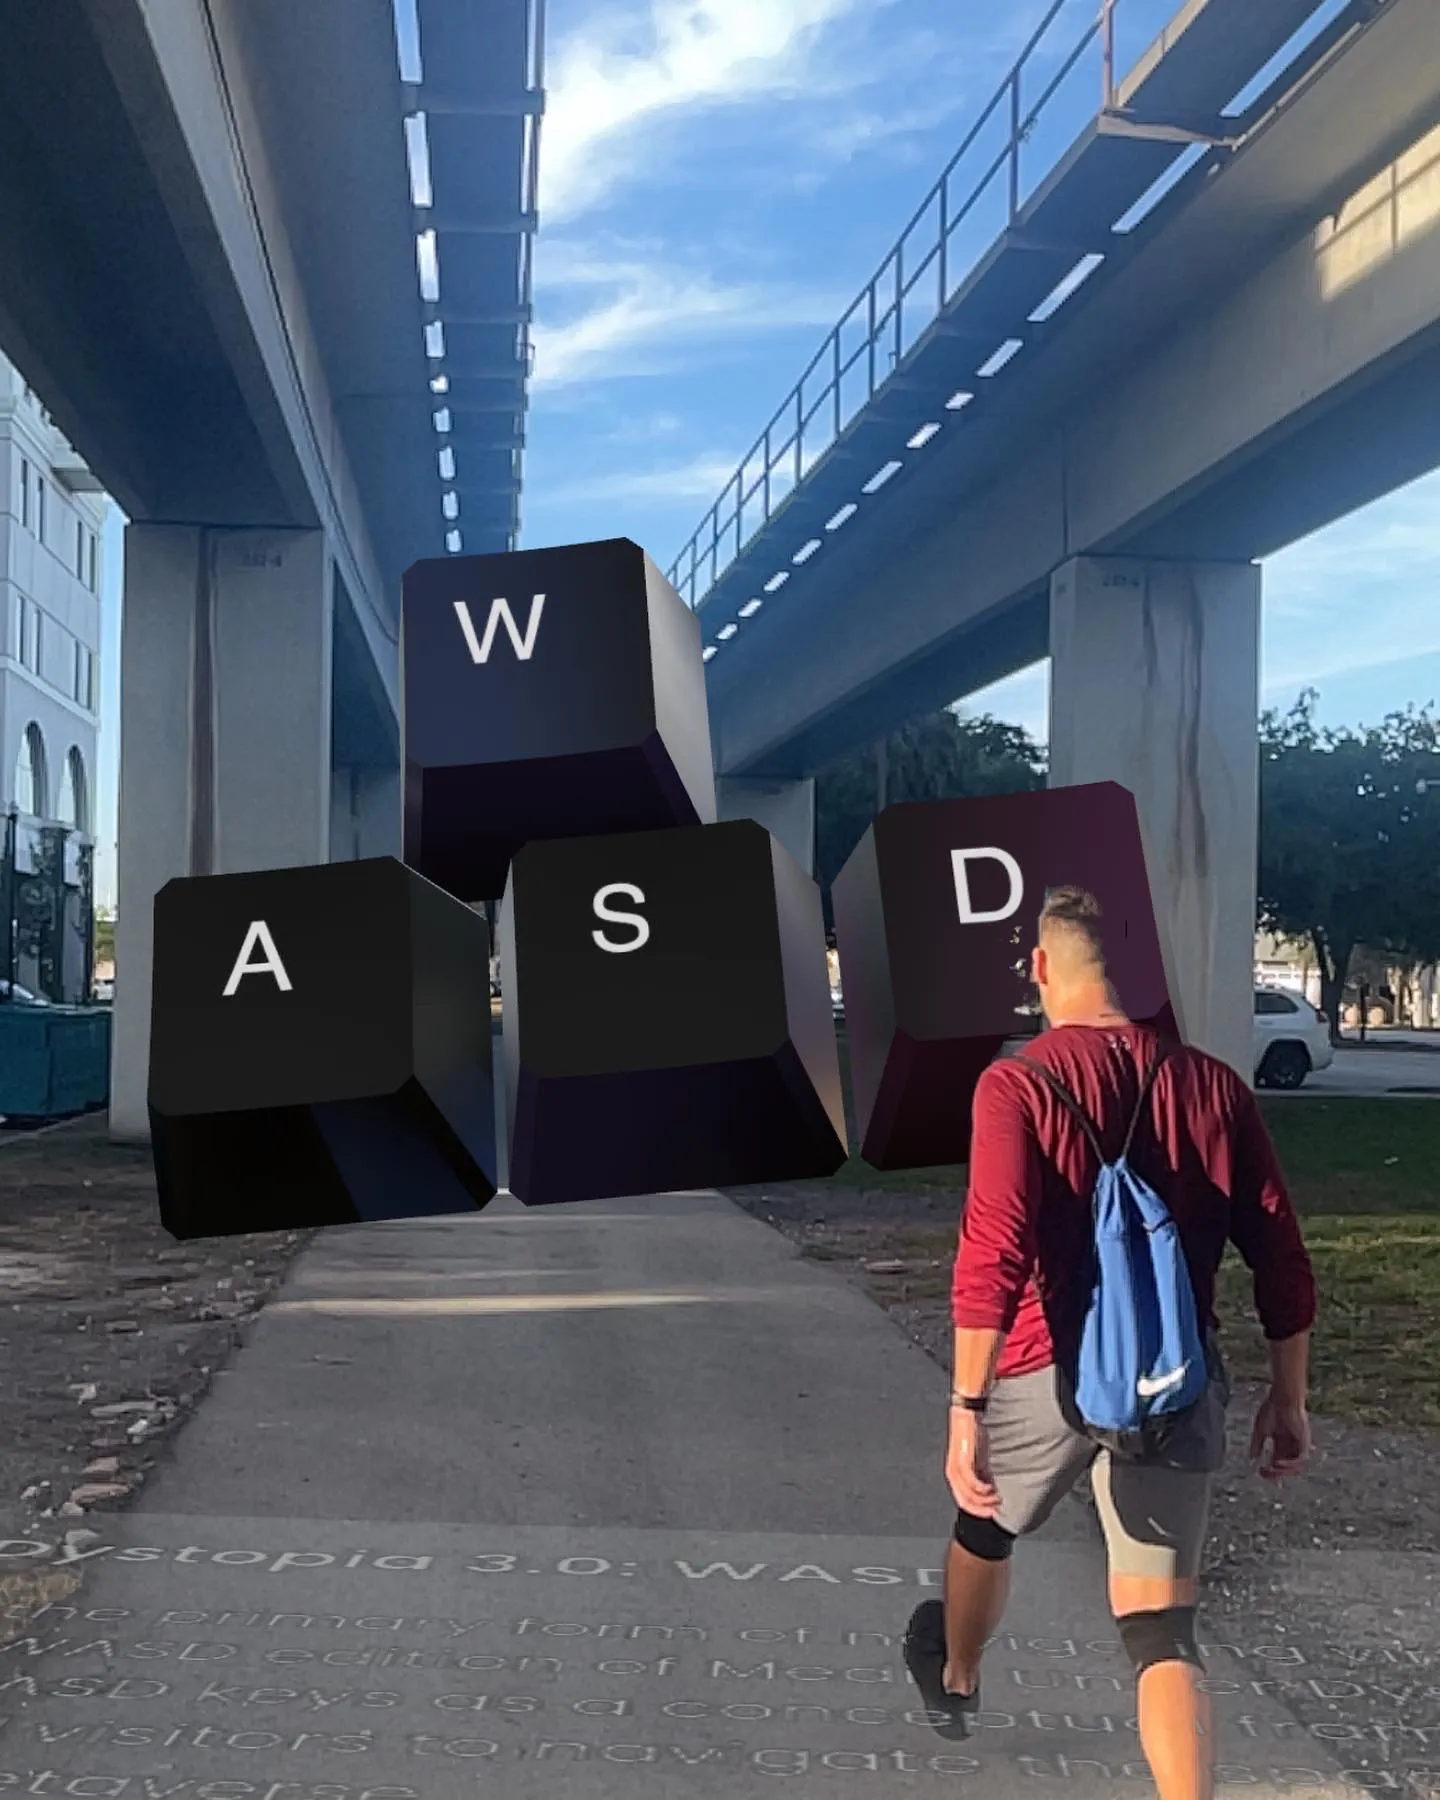 AWSD purple keys, AR object positioned on a street while a man walks in front of it